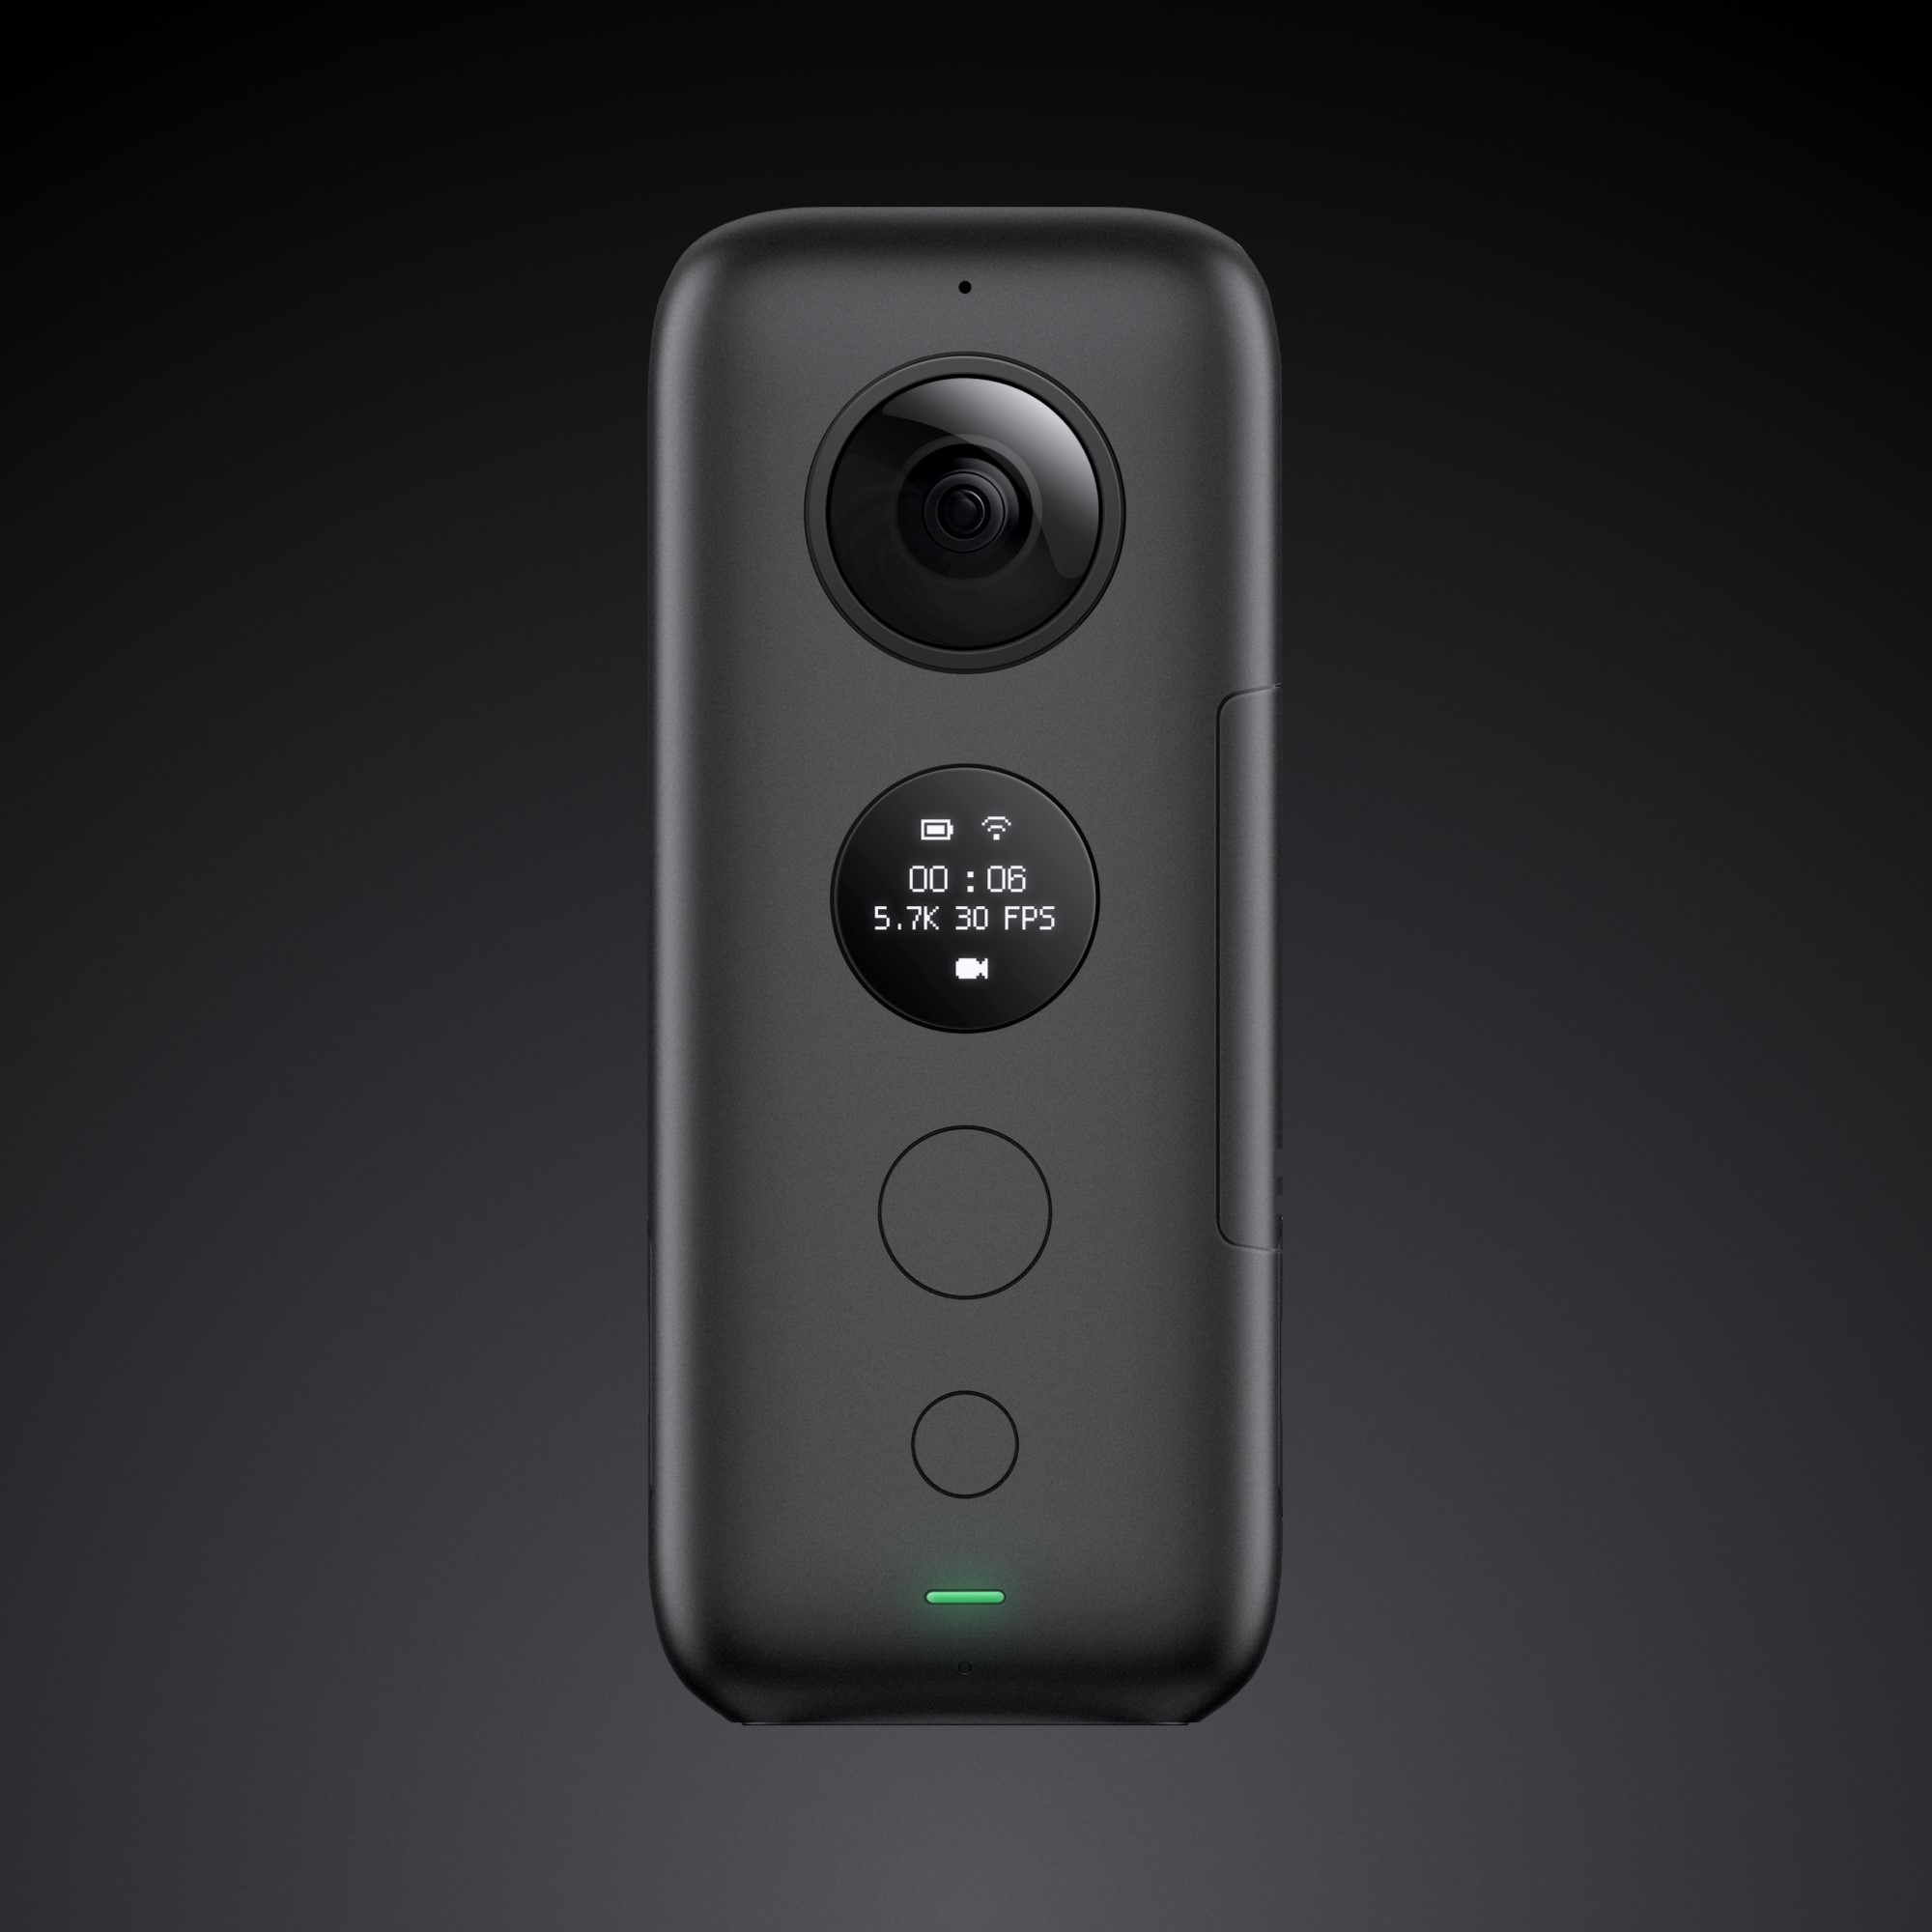 insta360 one x发布:5.7k画质高品质防抖,运动全景相机新